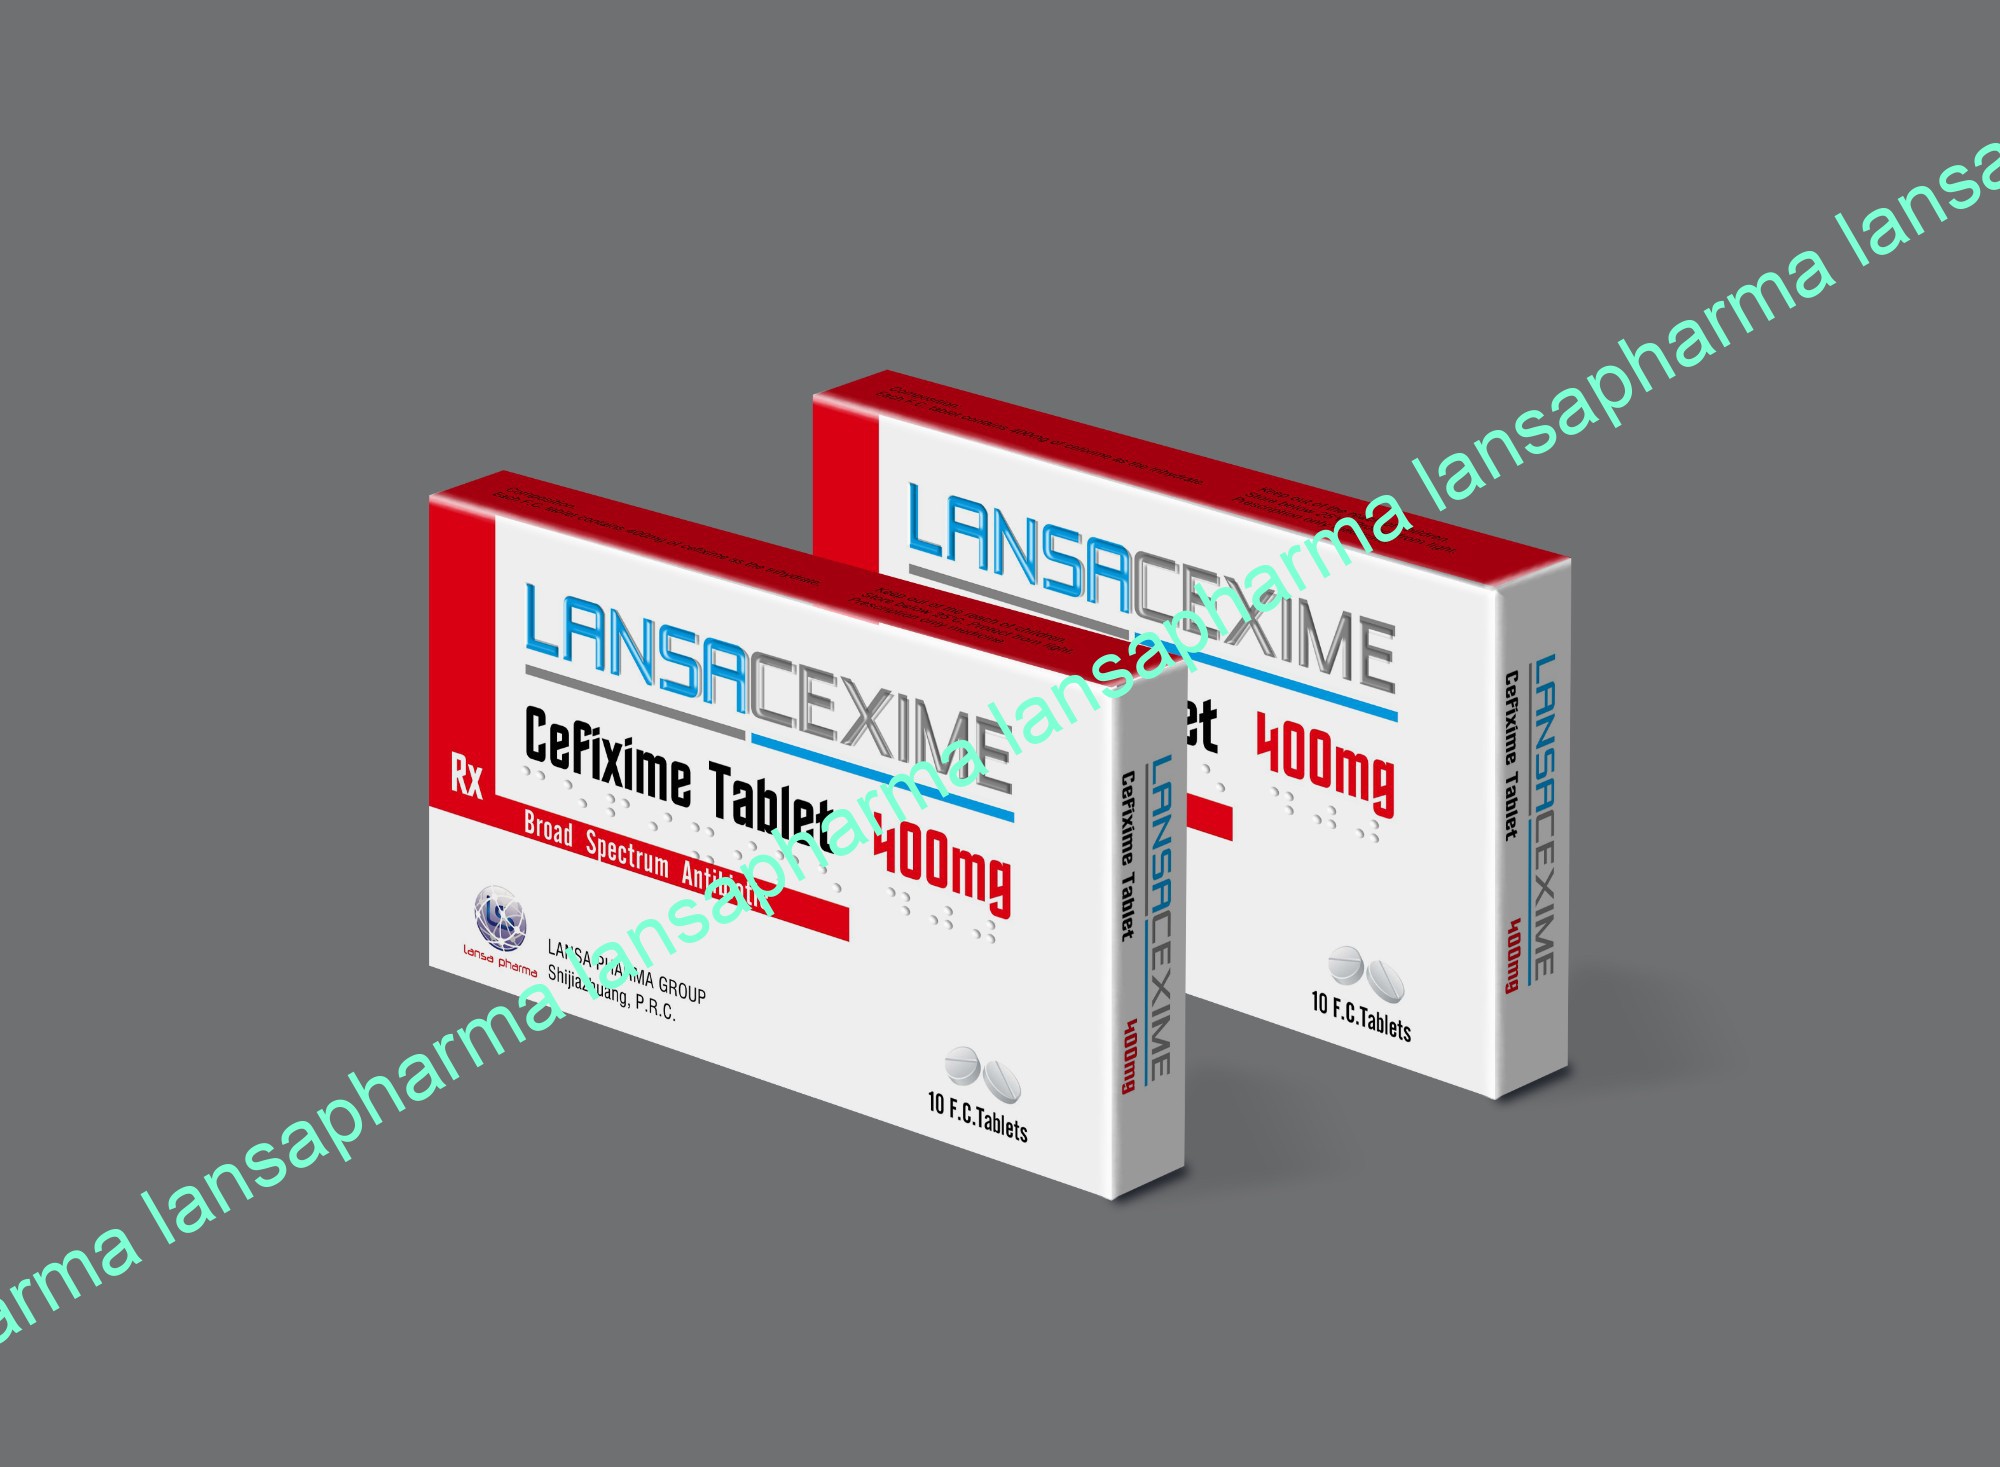 Cefixime 400 mg Tablets